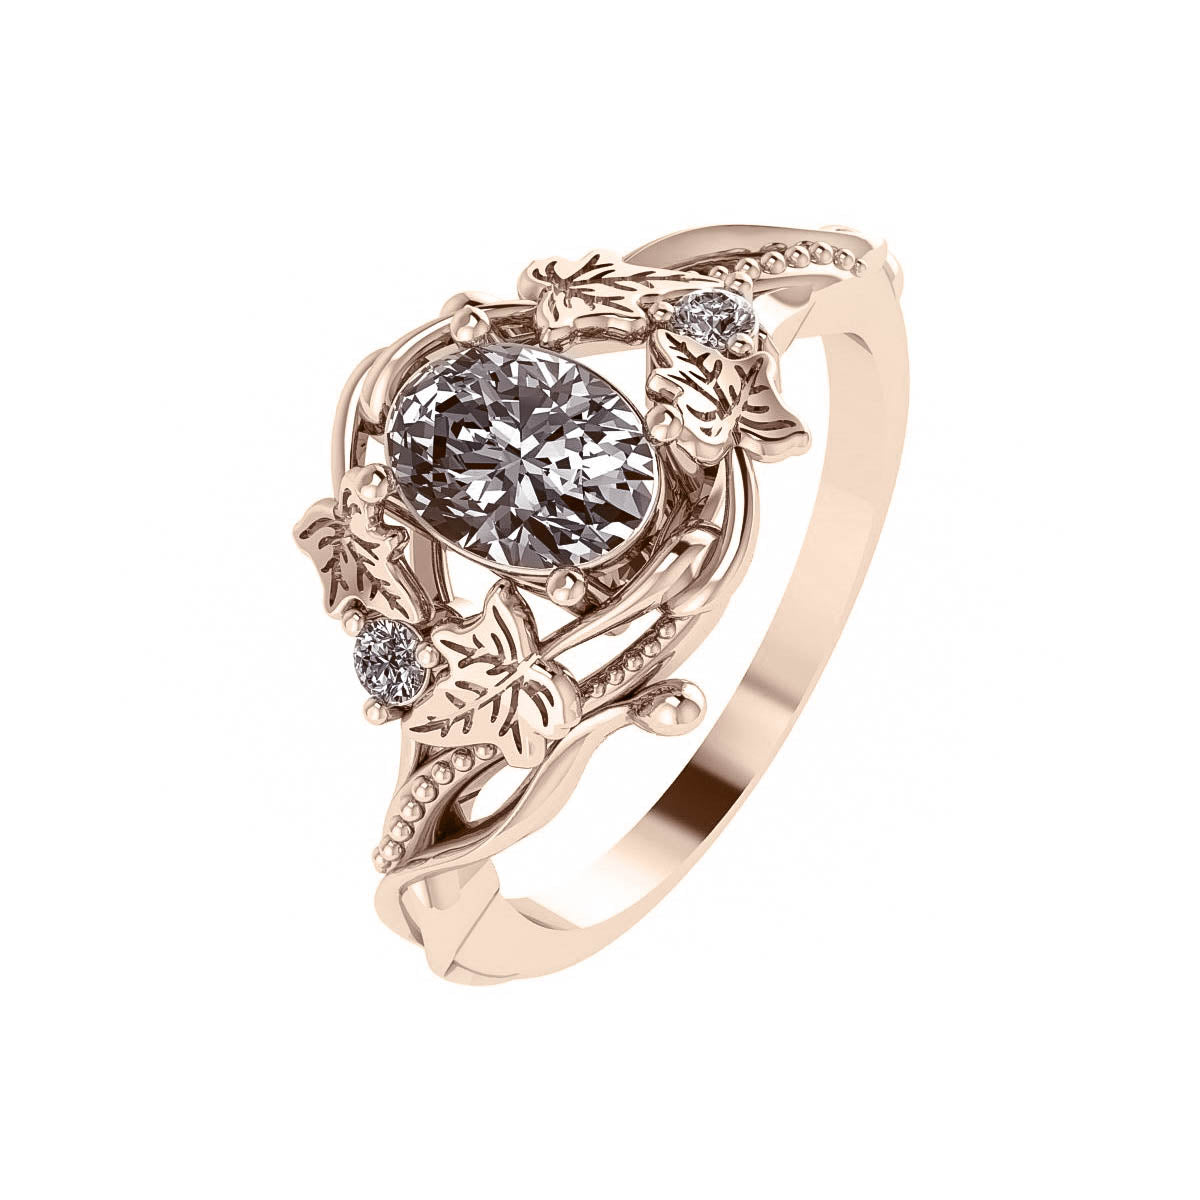 Ivy Undina | oval cut gemstone setting 7x5 mm - Eden Garden Jewelry™